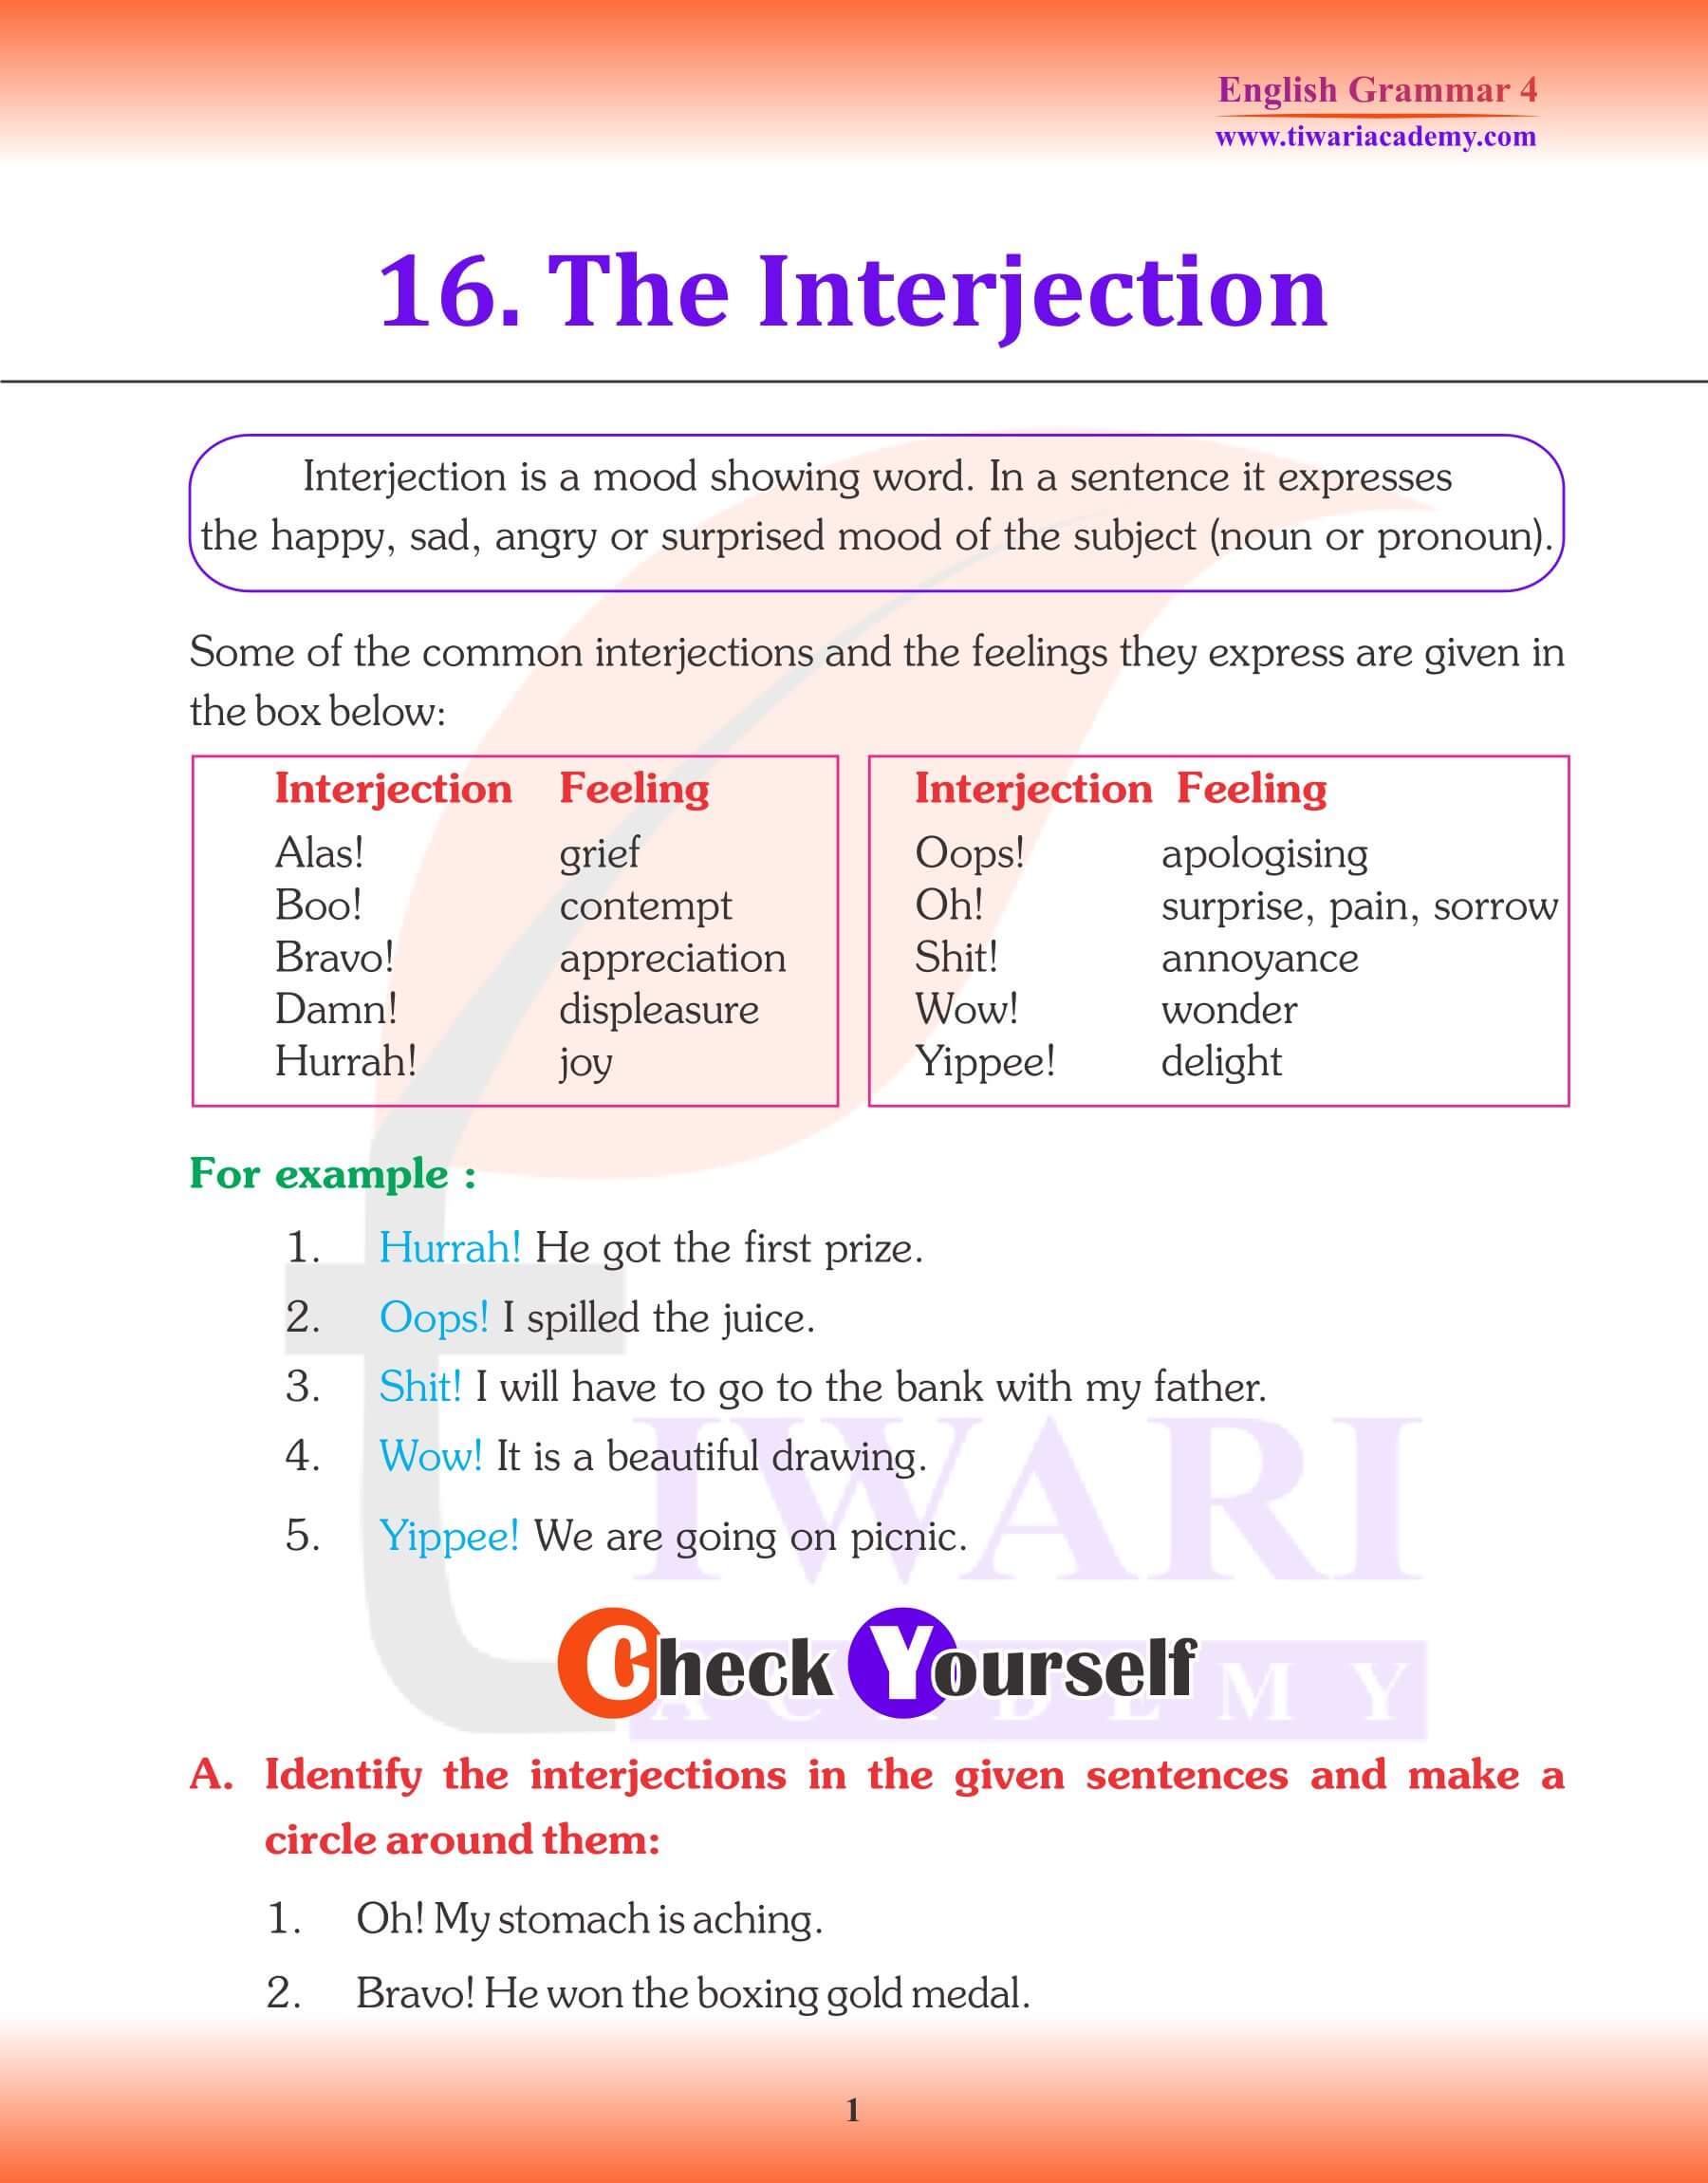 Class 4 English Grammar Interjection Revision Book